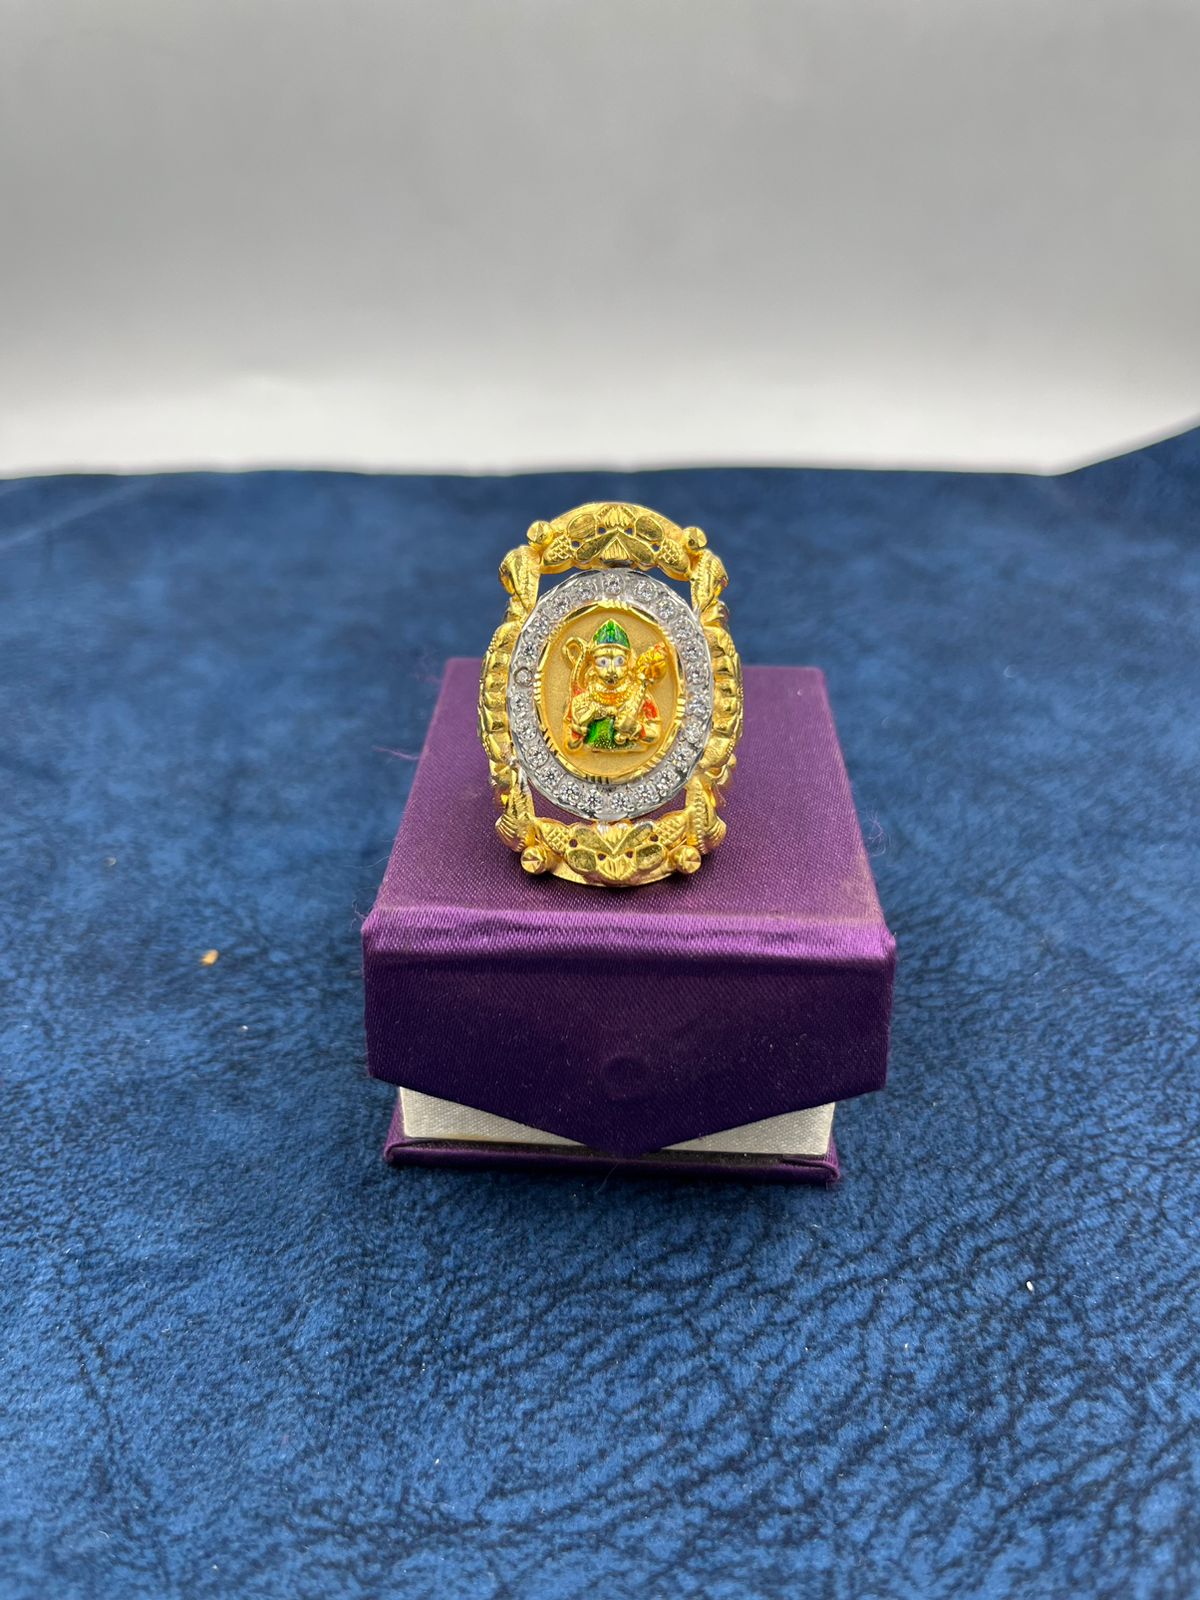 Aadhyathmika Aimpon Panchalogam Bhaktha Anjaneya Ring Panchaloha Baktha Hanuman  Ring (5 Metals Panchadhatu) - A4828 - Aadhyathmika Kendra Chennai